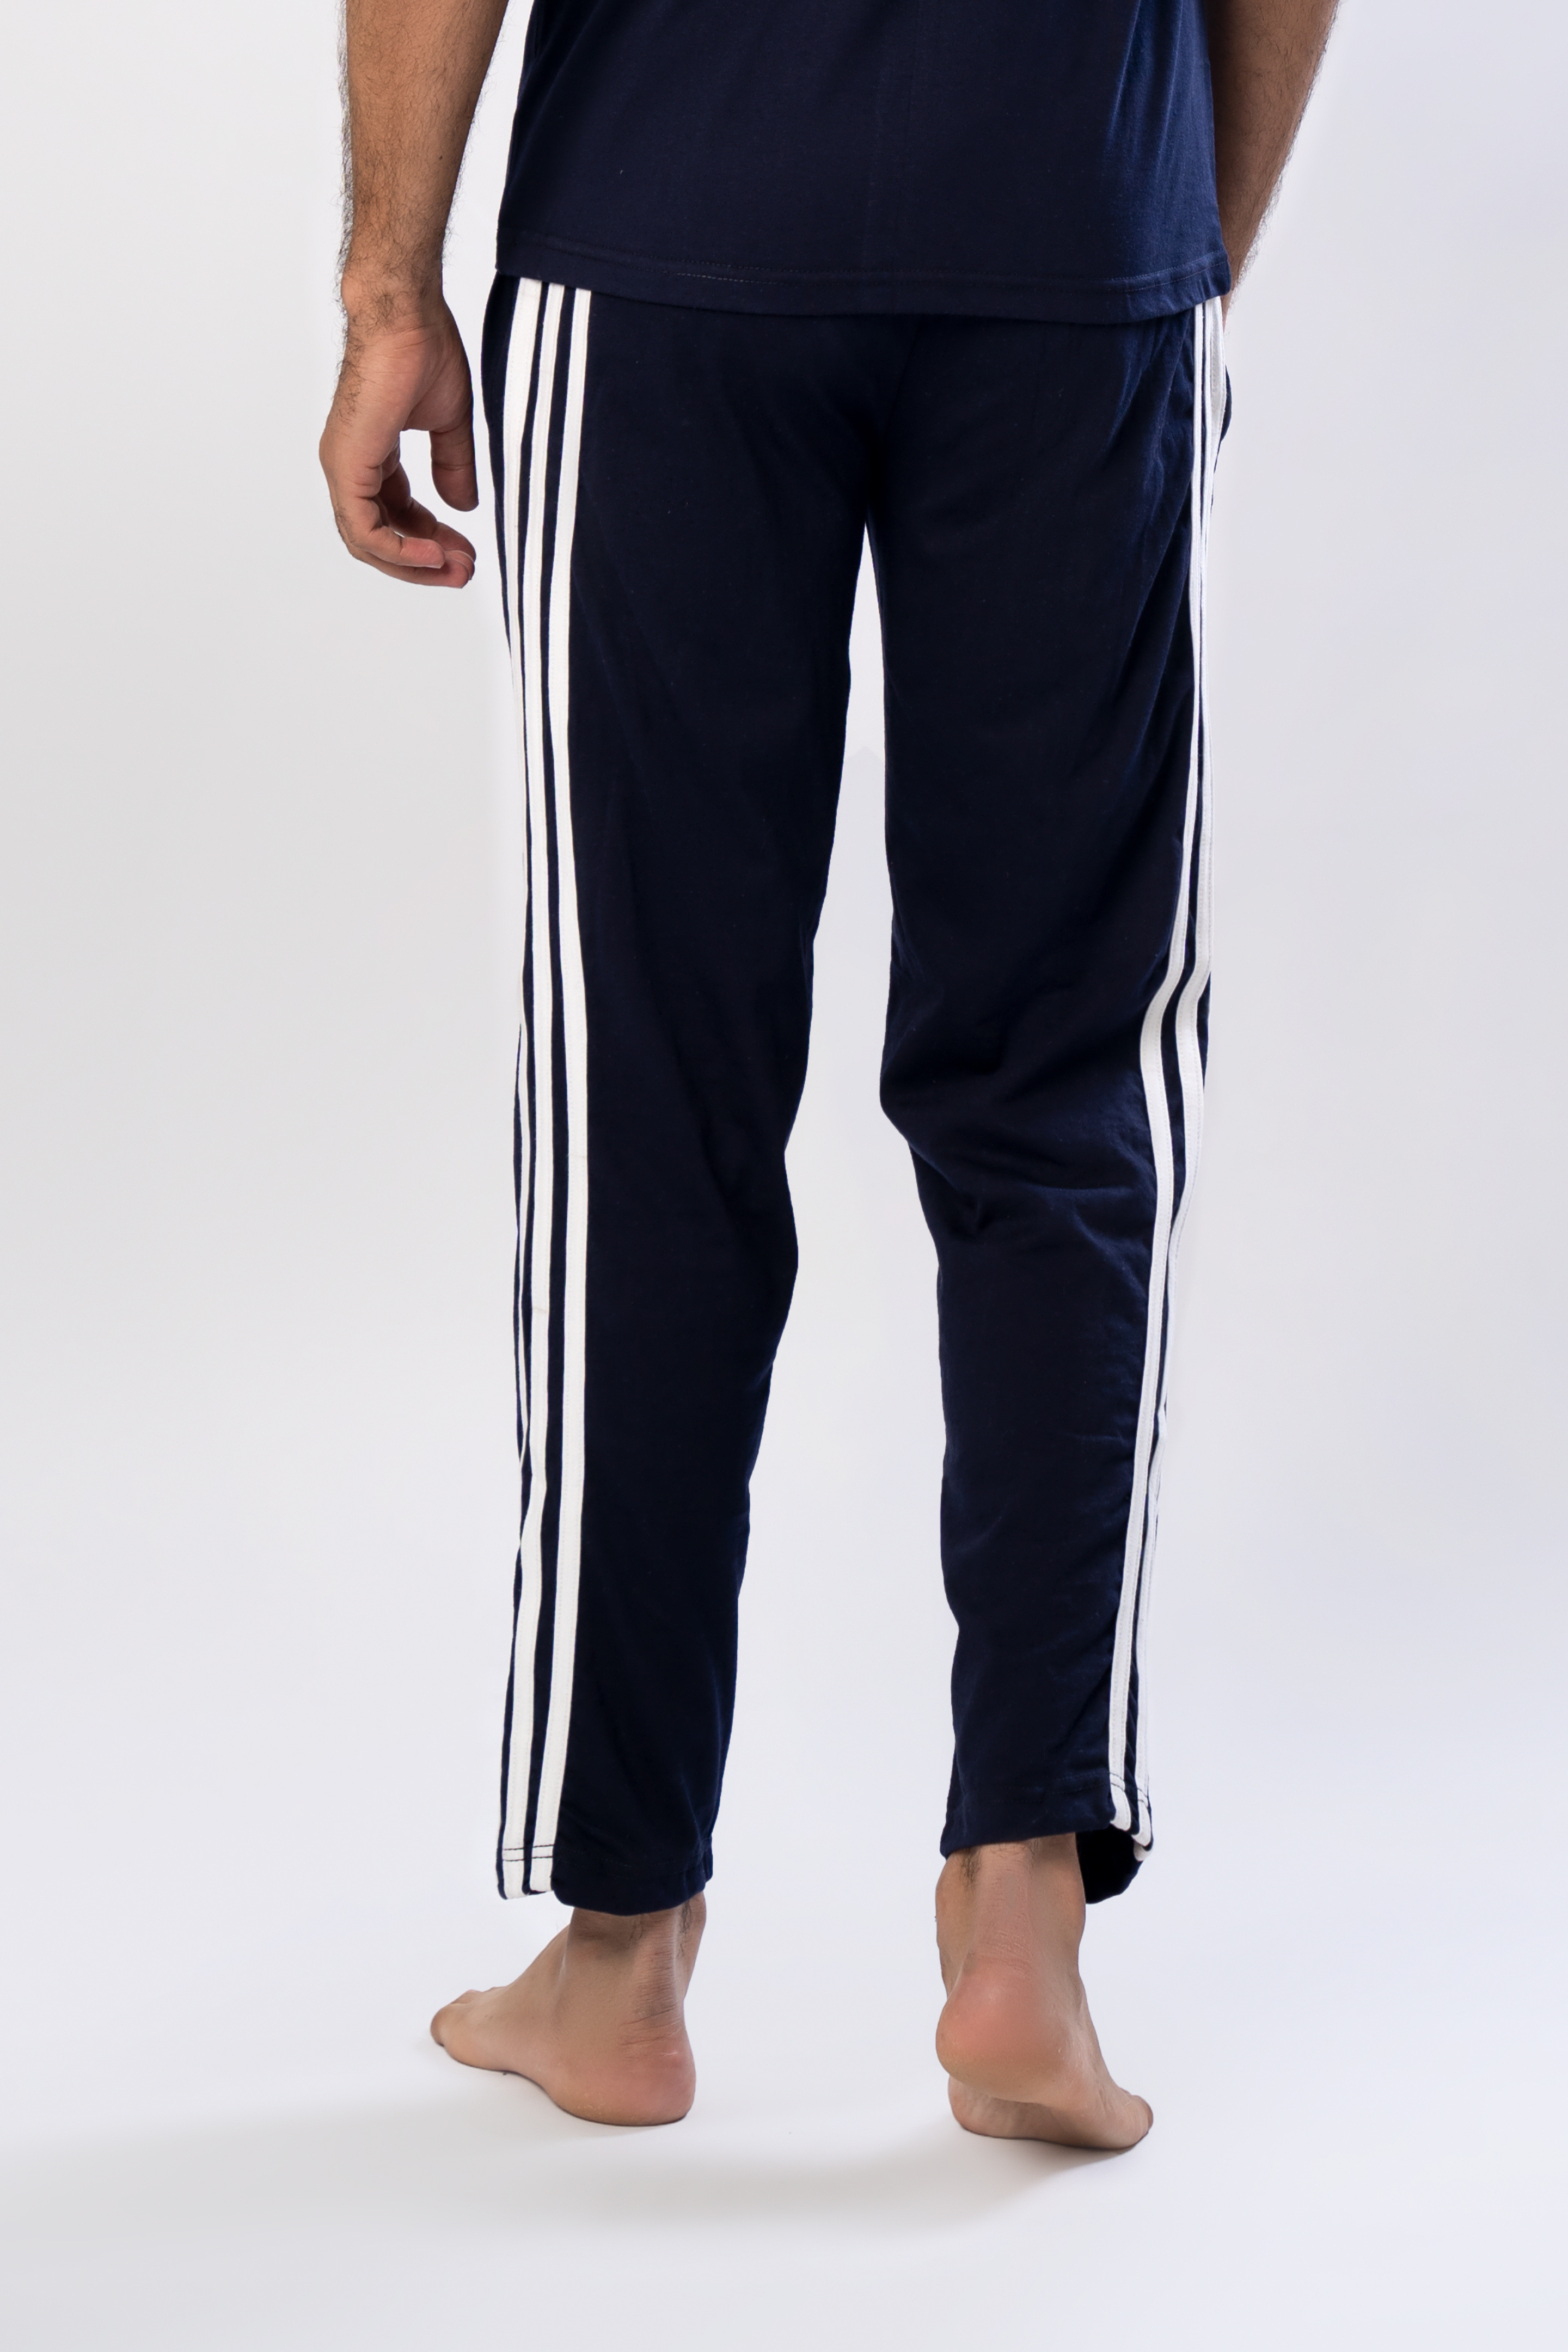 Quick Dry Side Stripe Zipper Bottom Activewear Pants - Home